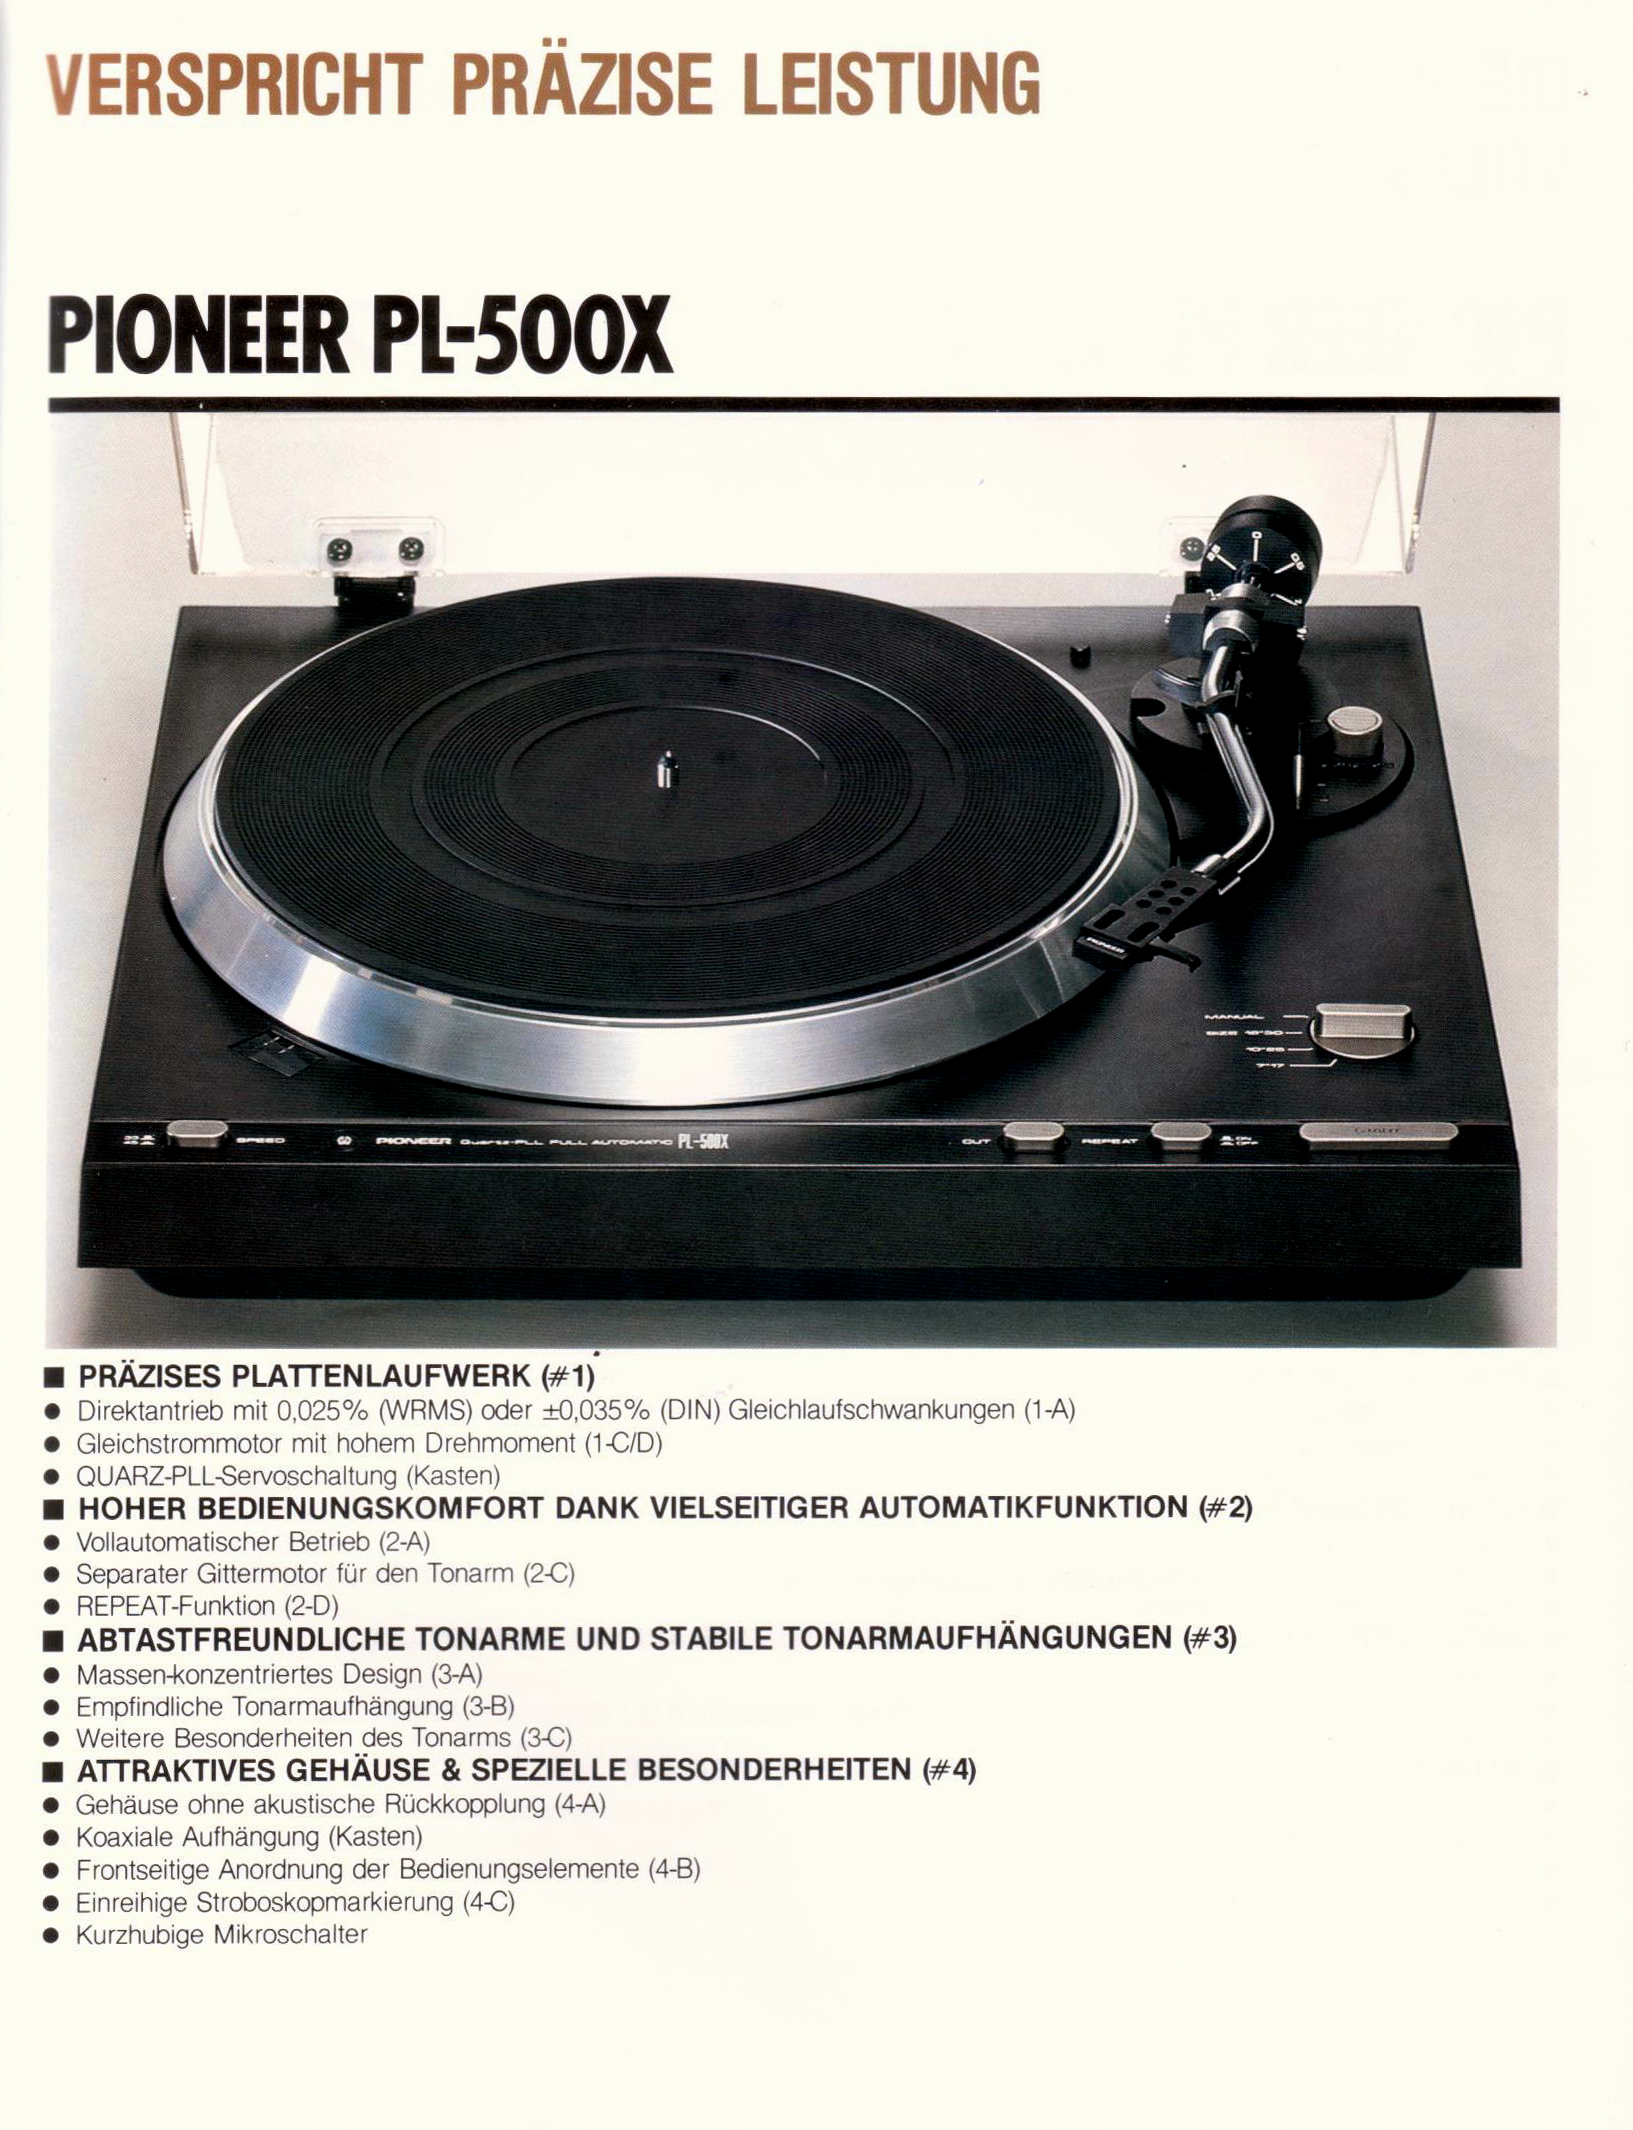 Pioneer PL-500 X-Prospekt-19801.jpg